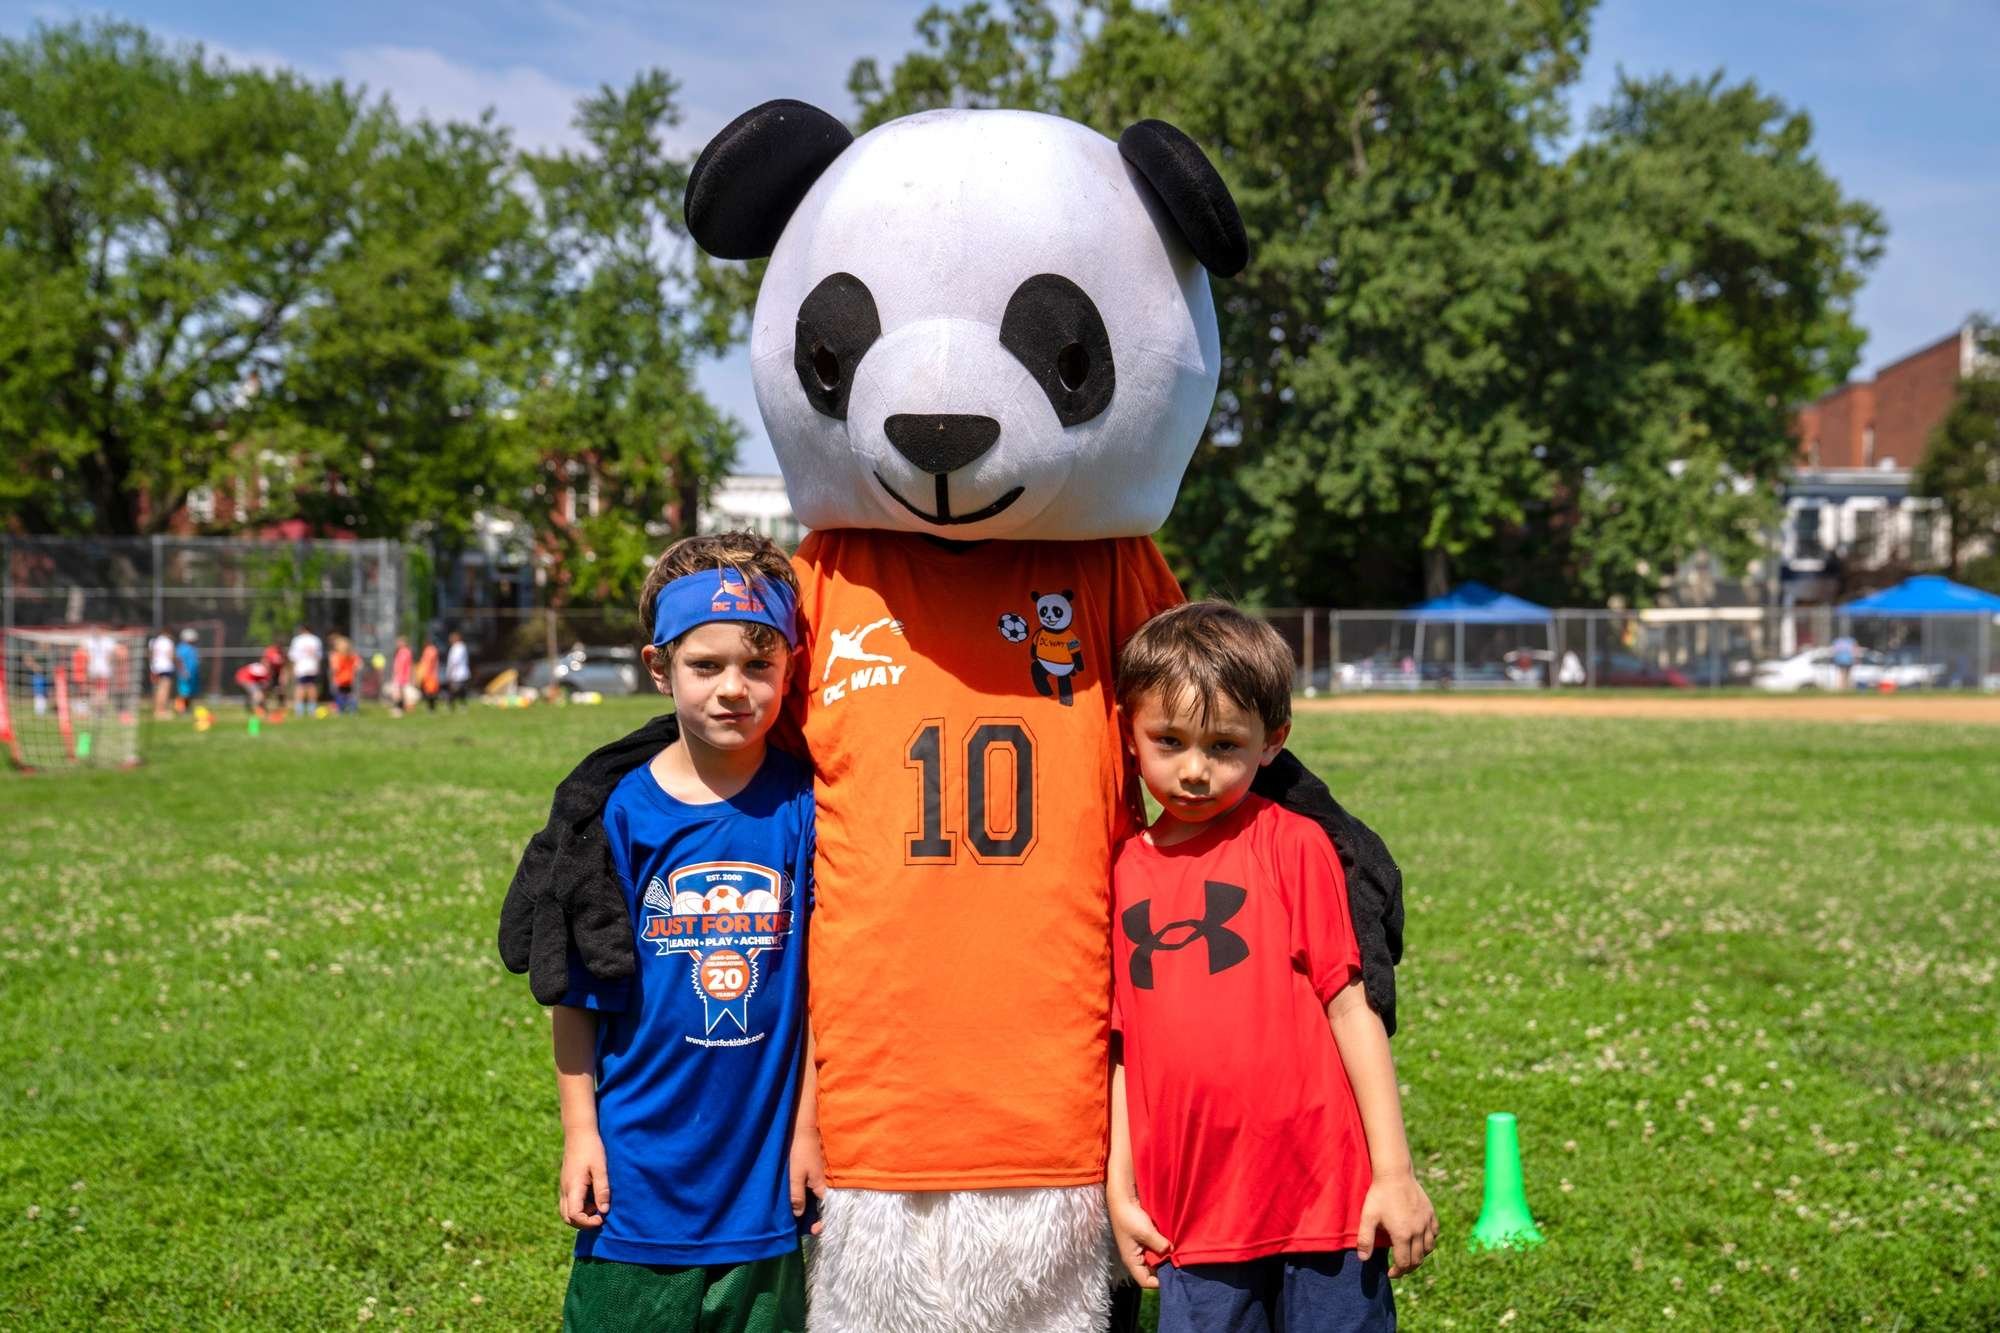 Dc-way-soccer-club-for-kids-in-washington-dc-summer-camp-at-tyler-elementary-school- 0239.jpg